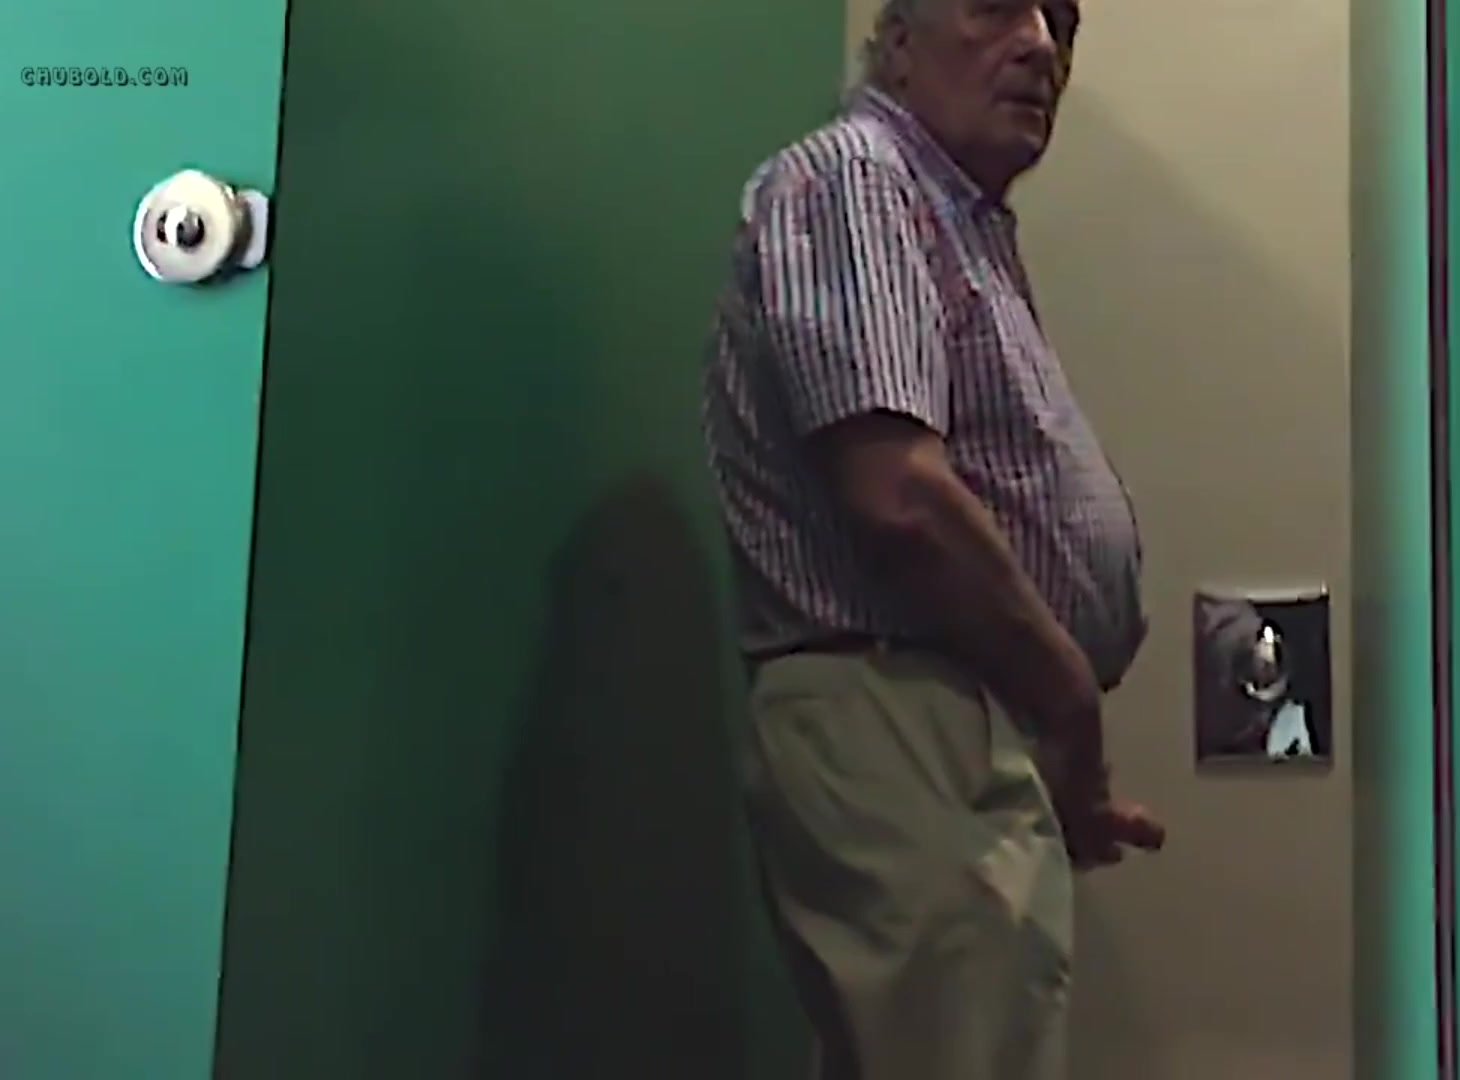 Grandad cruising in the restrooms